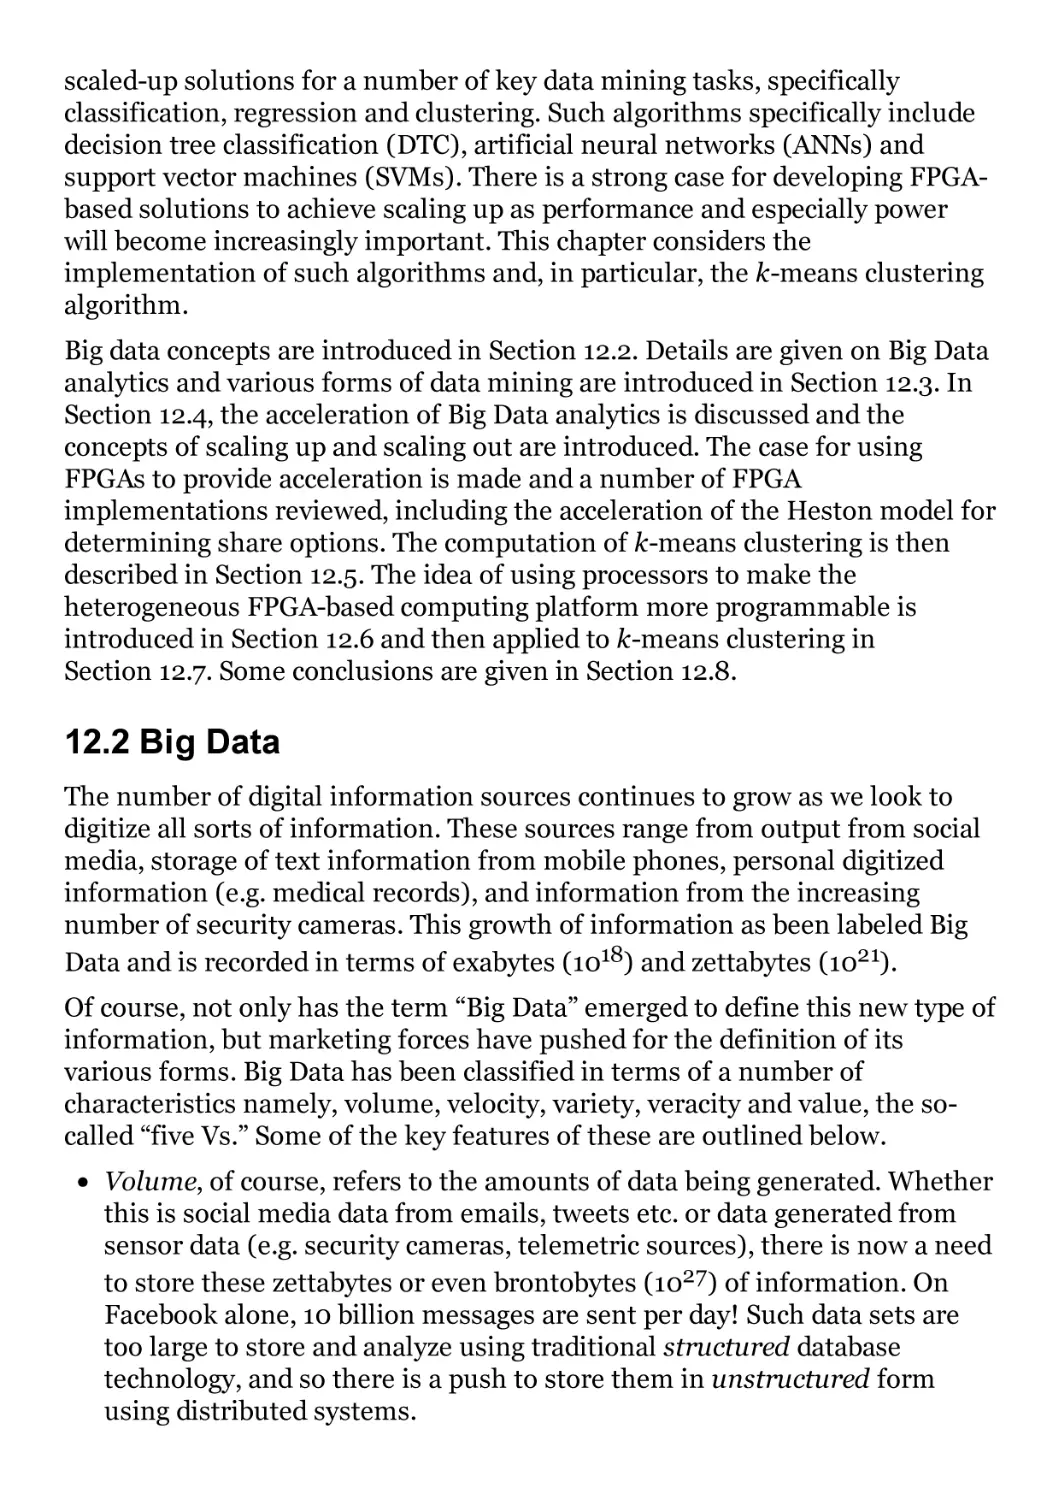 12.2 Big Data